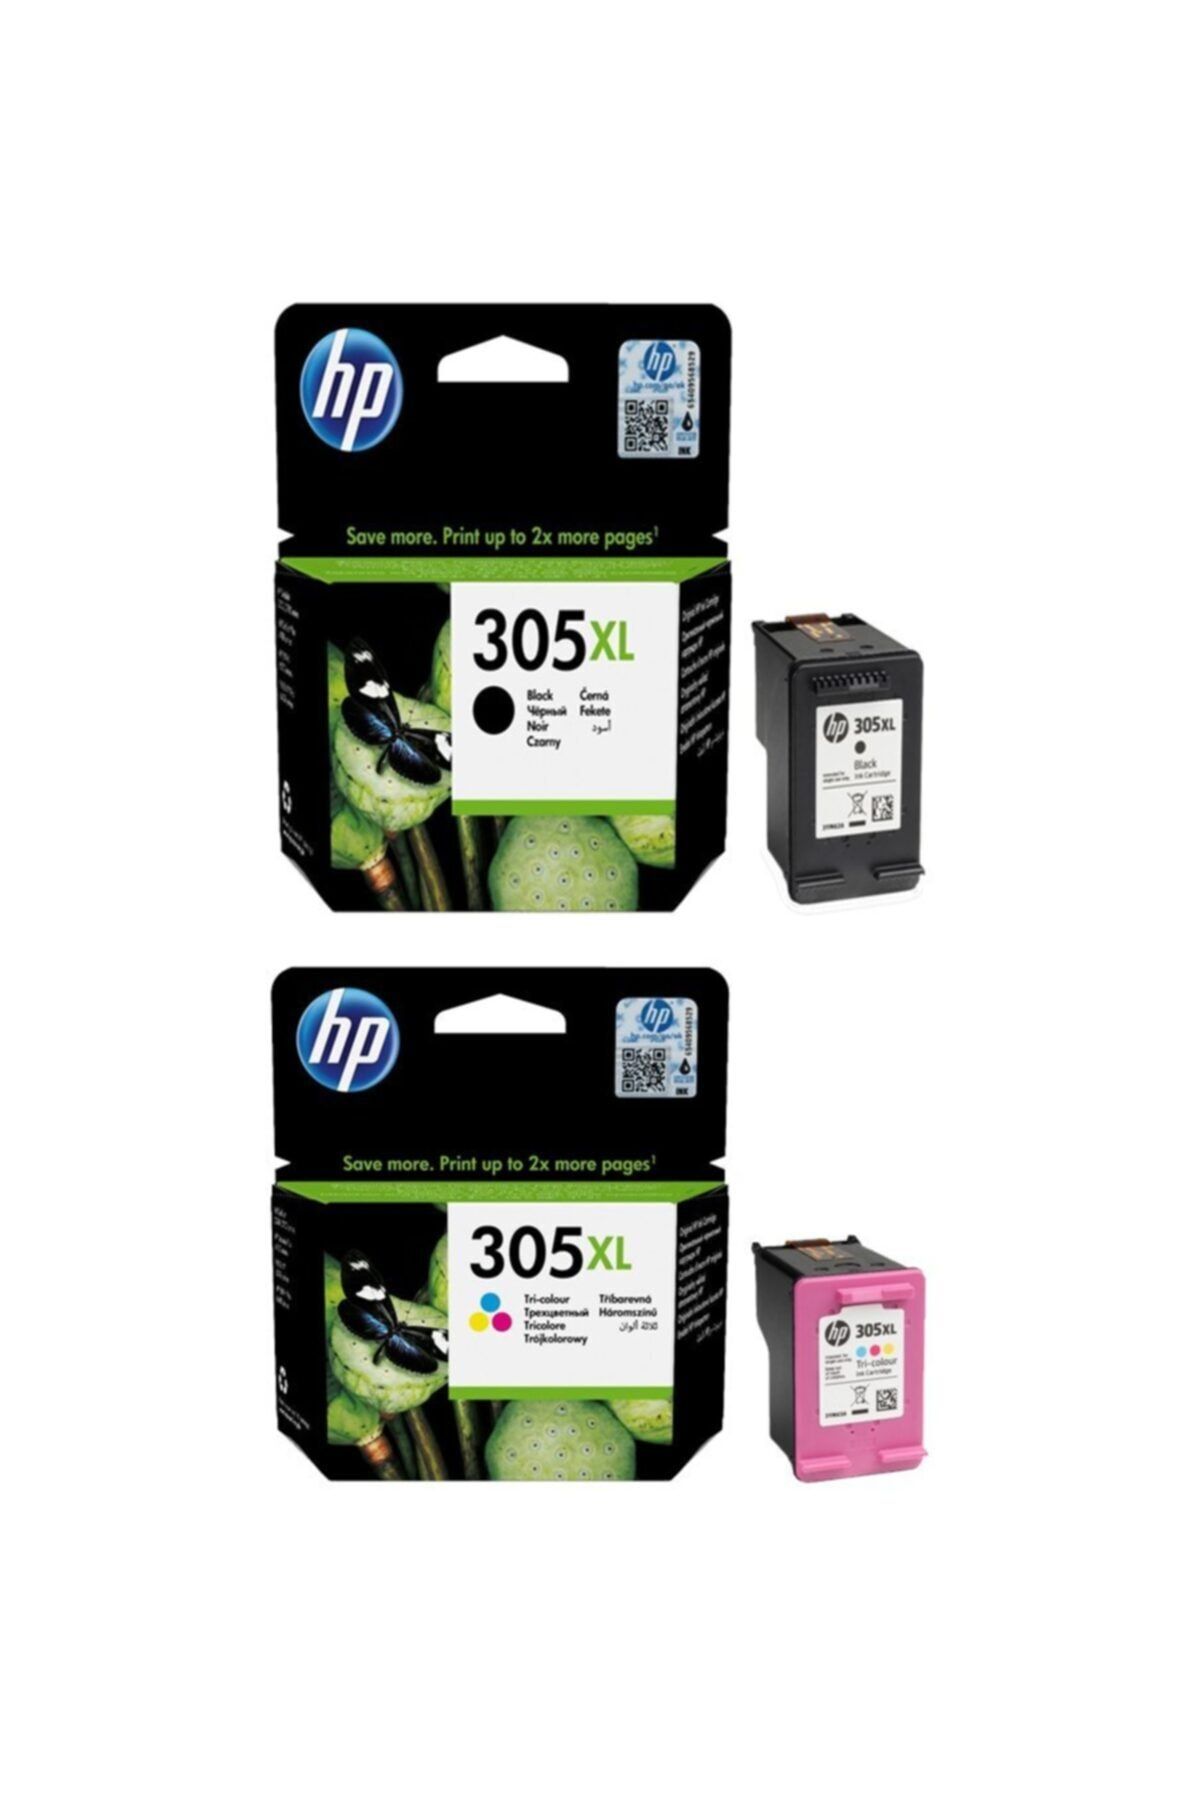 HP 305xl Orijinal Siyah Ve Renkli 2li Paket - 3ym63ae / 3ym62ae Deskjet 2320